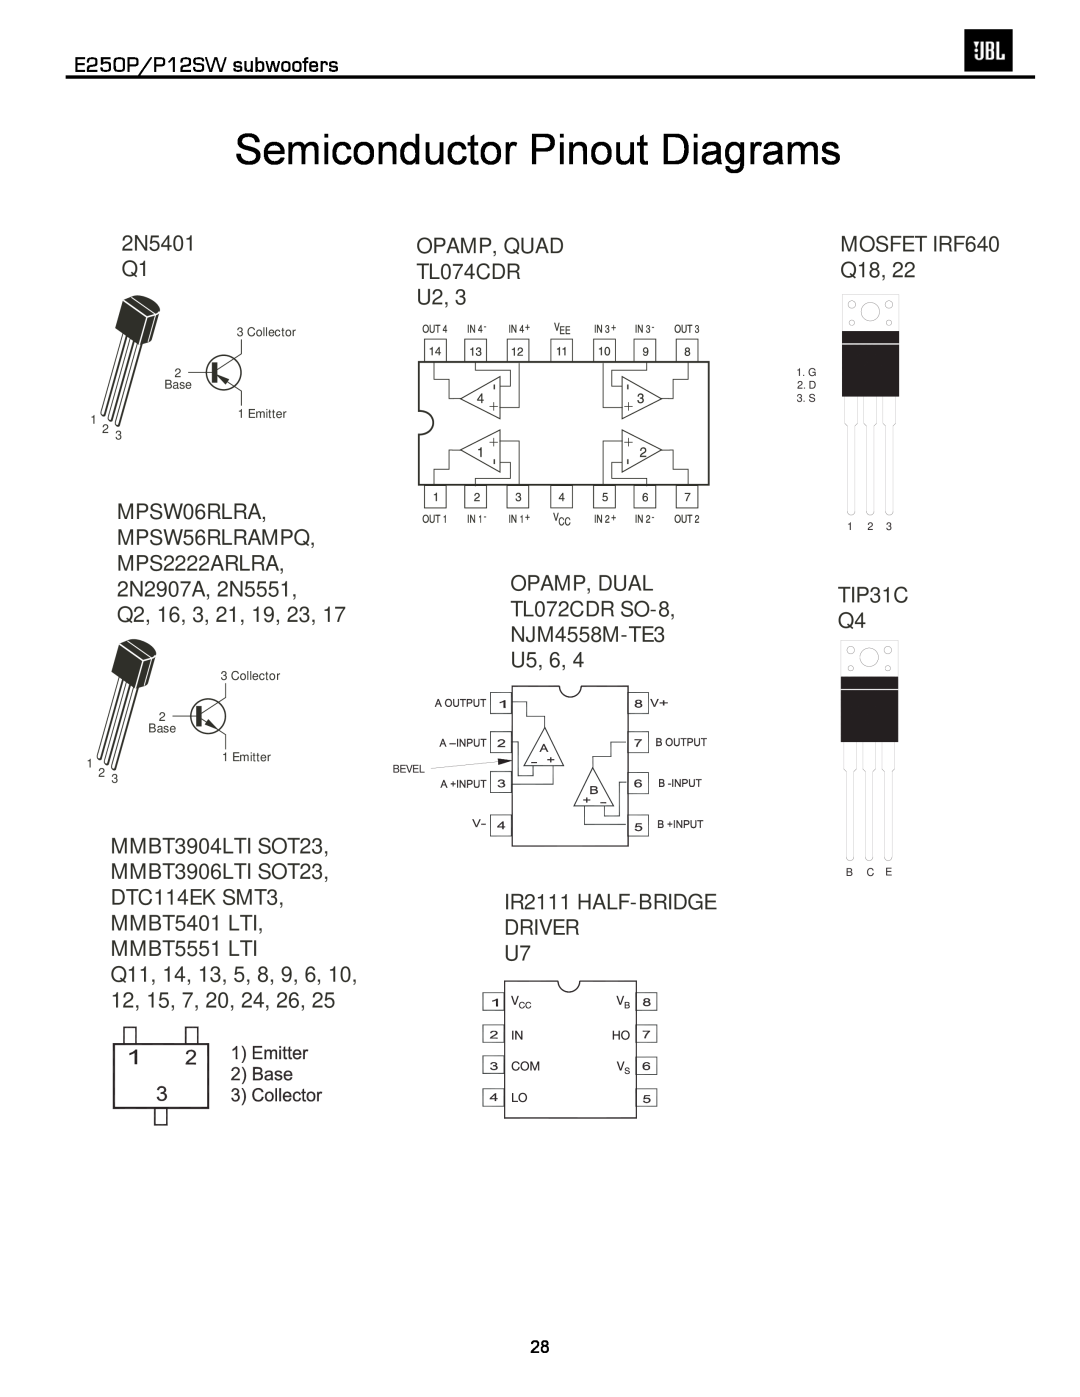 JBL service manual Semiconductor Pinout Diagrams, E250P/P12SW subwoofers 